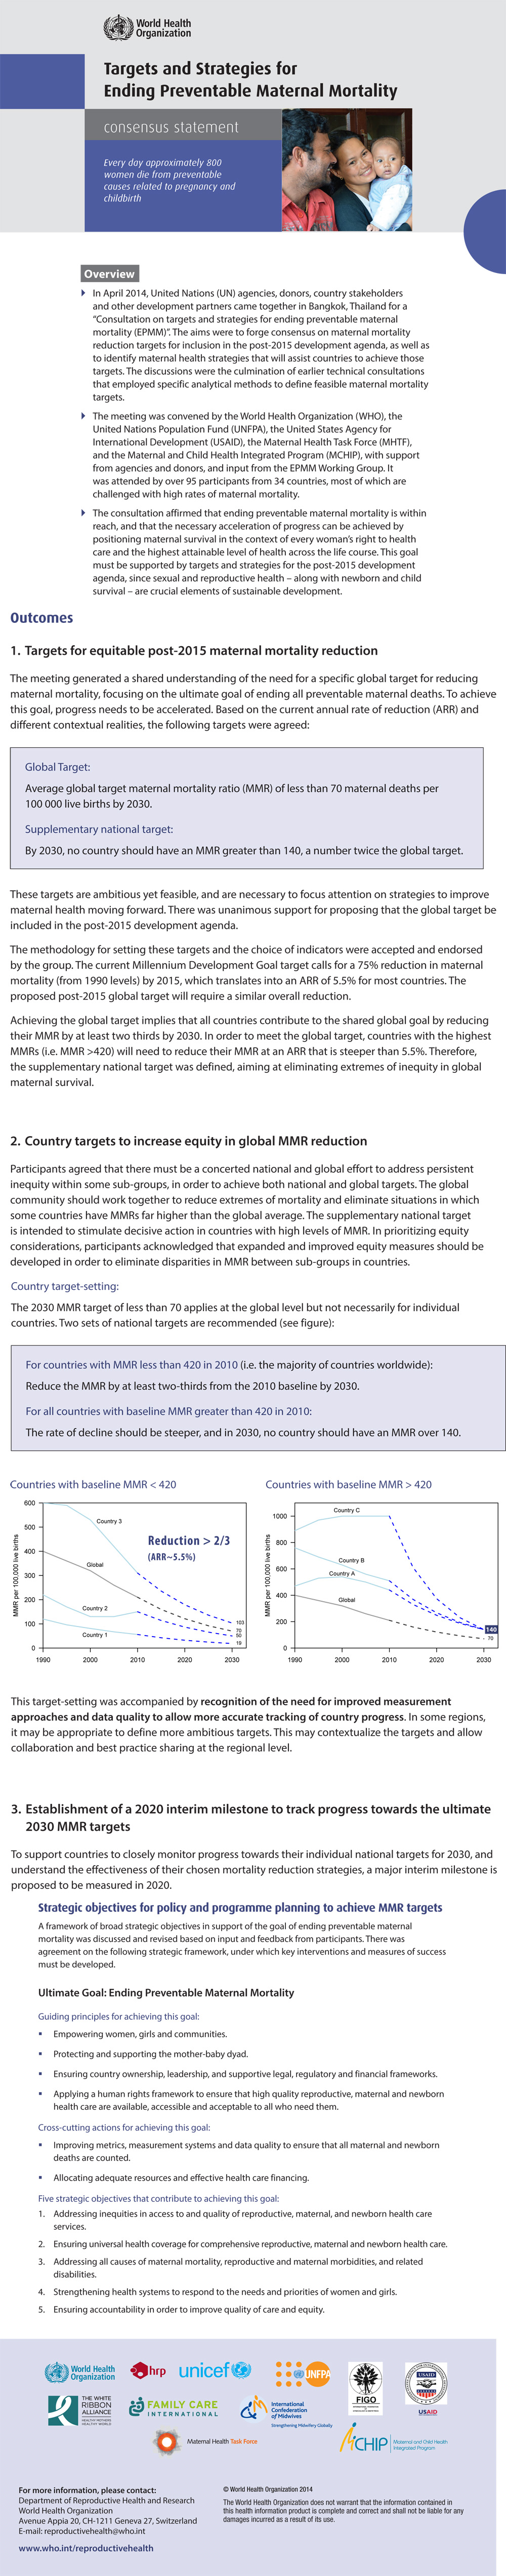 Target & Strategies for prevent mat mortality-1